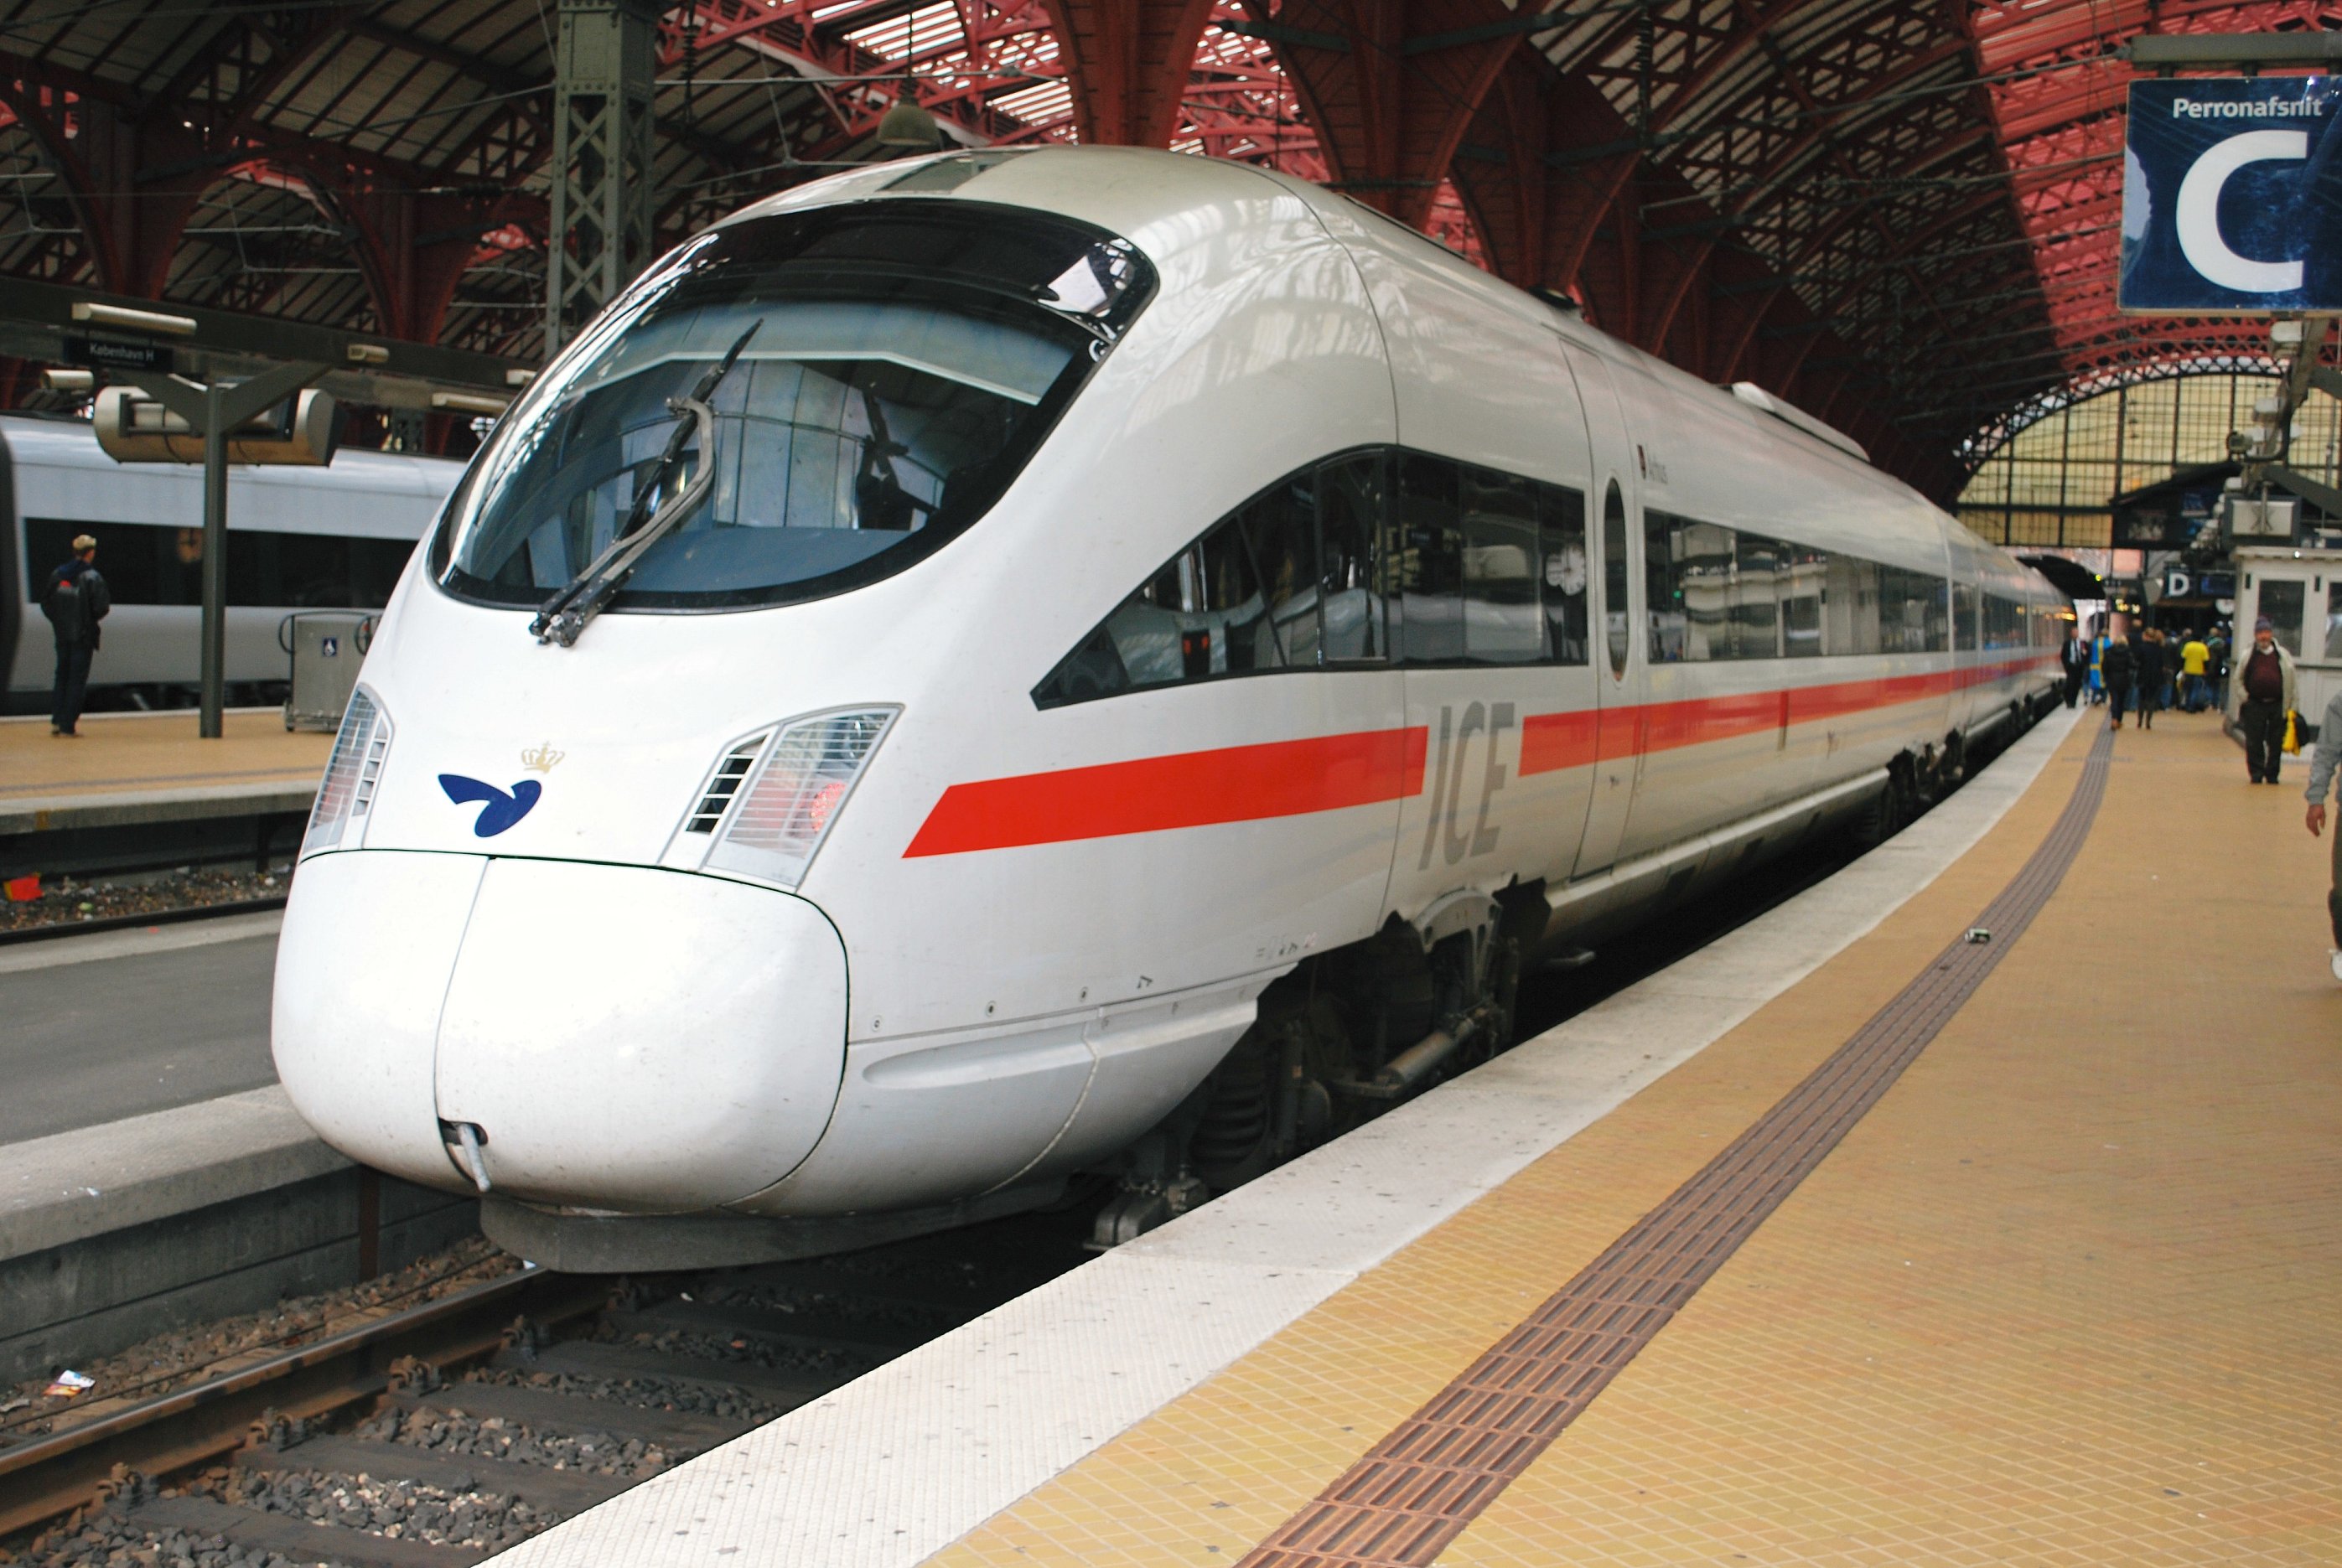 Deutsche Bahn's ICE train - improving energy efficiency in rail